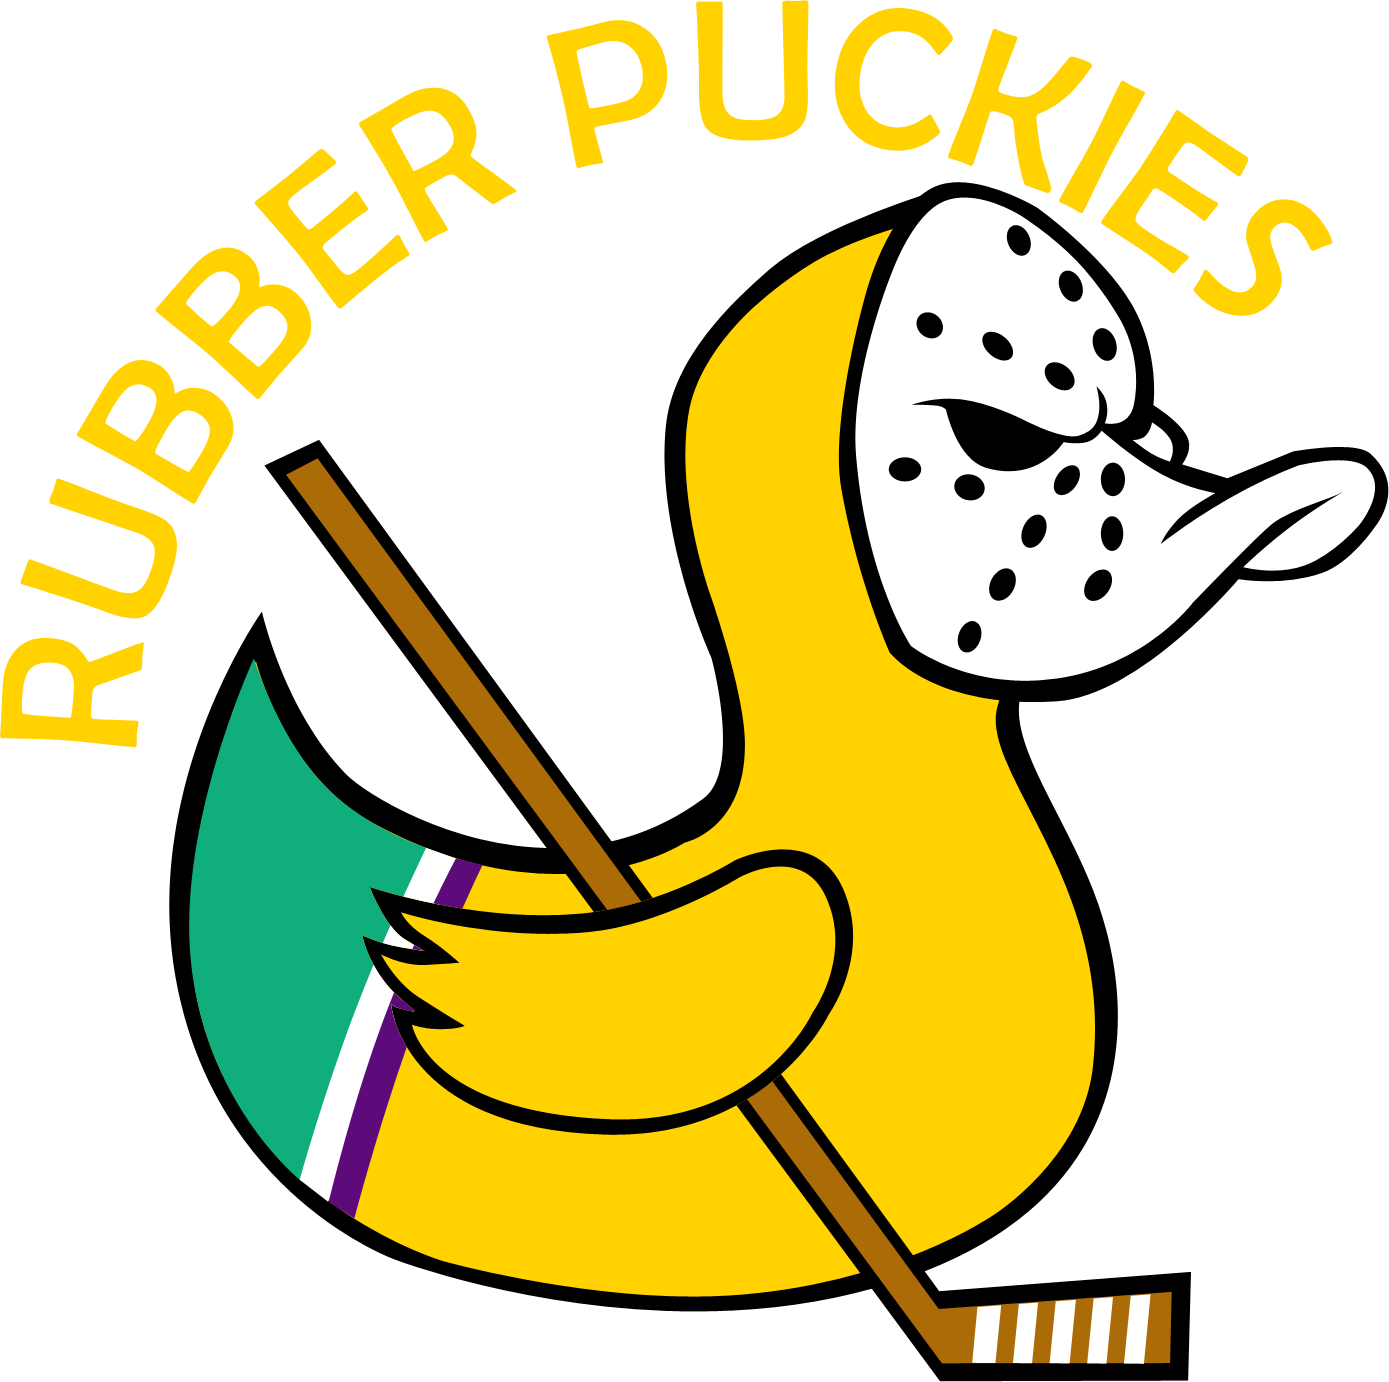 Rubber Puckies